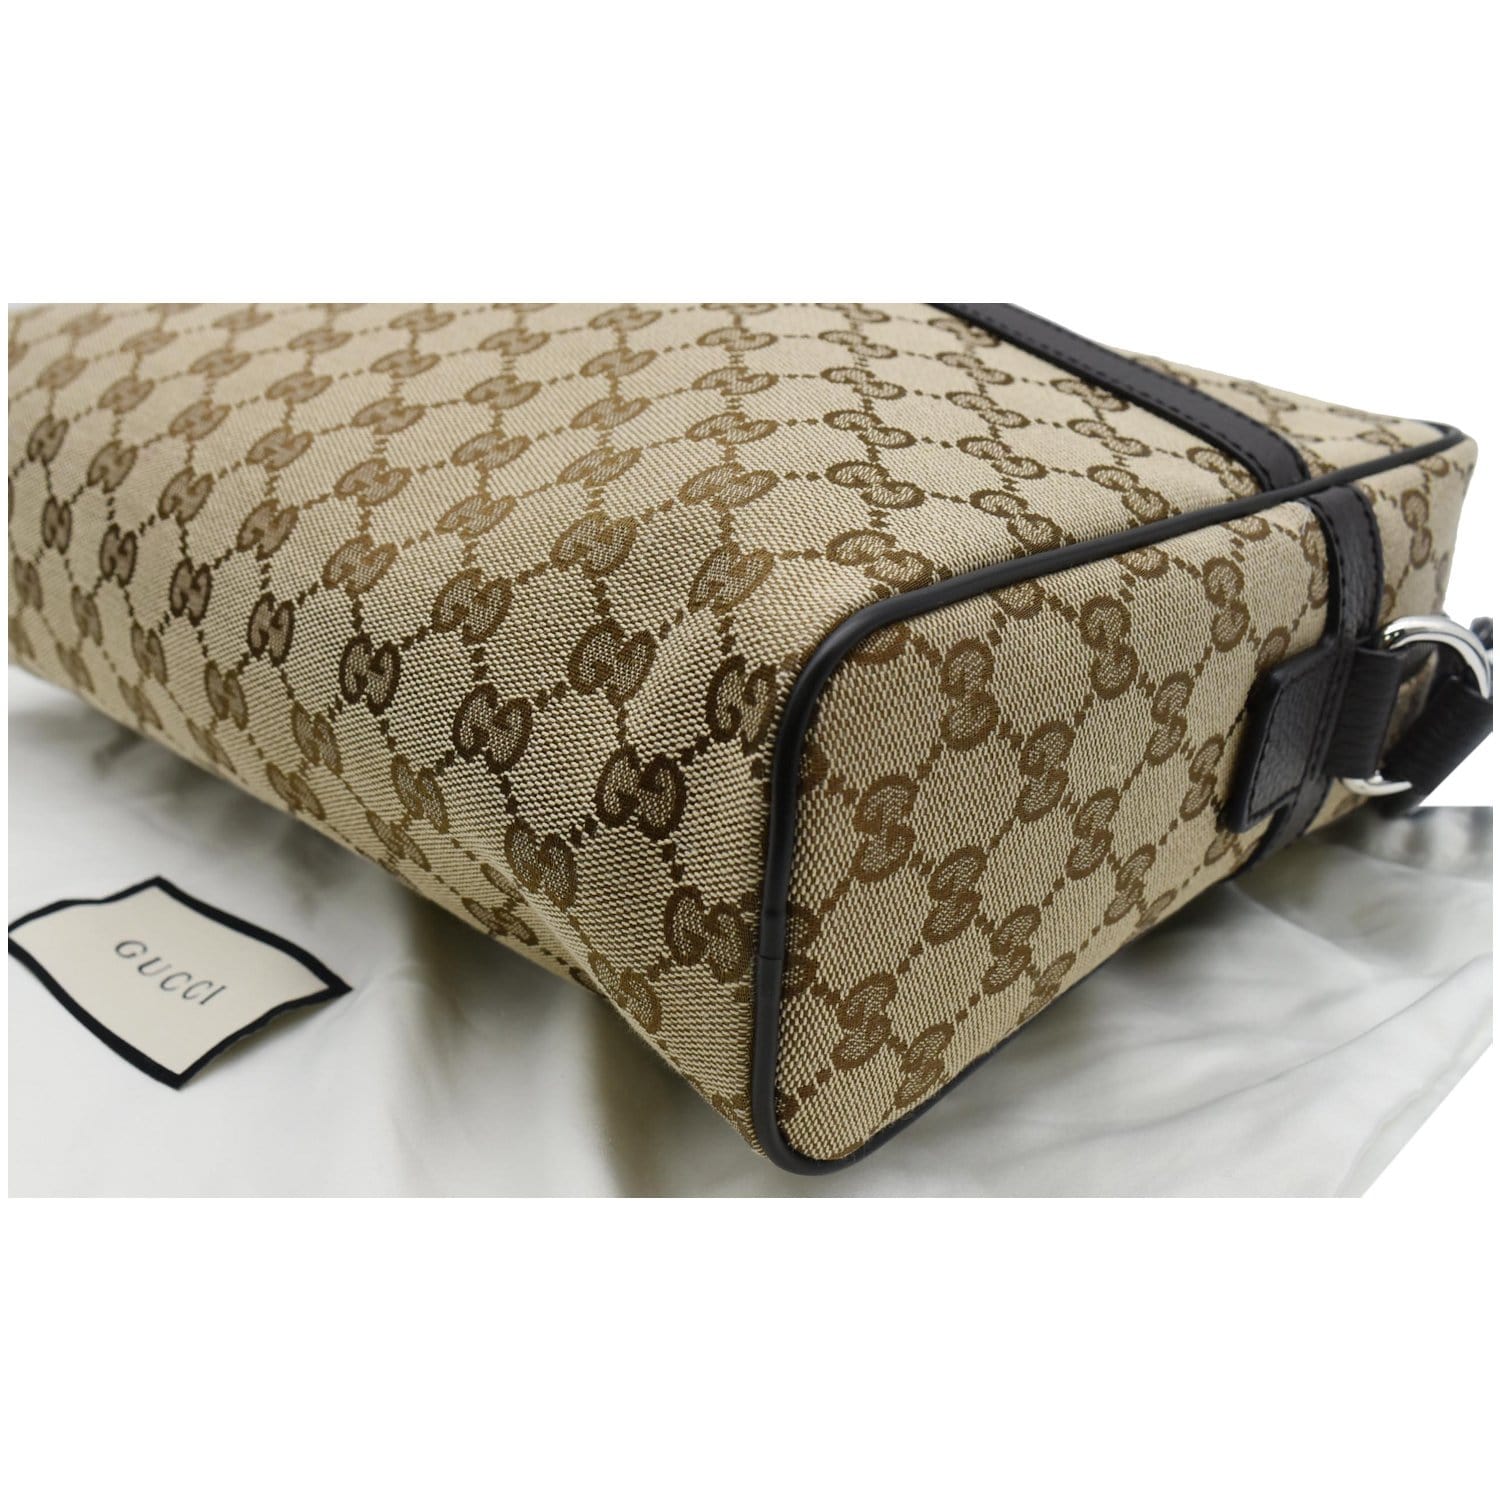 Gucci Original GG Canvas Cross Body Unisex Messenger Bag 449172 